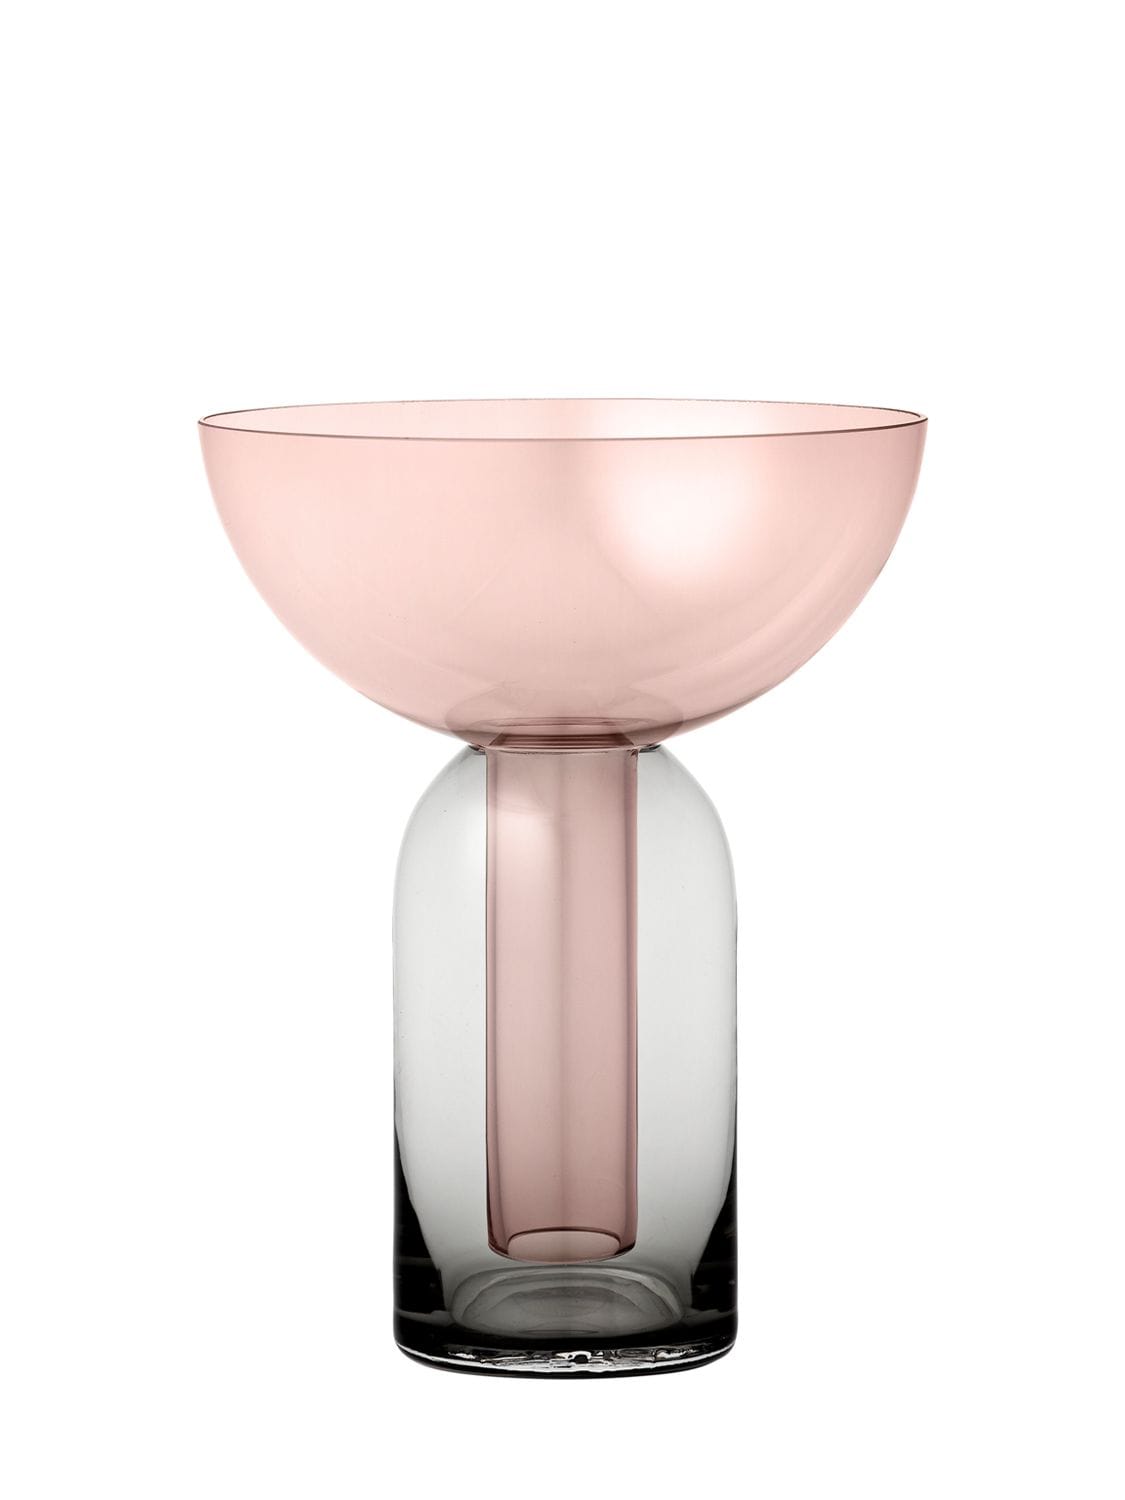 Image of Torus Vase